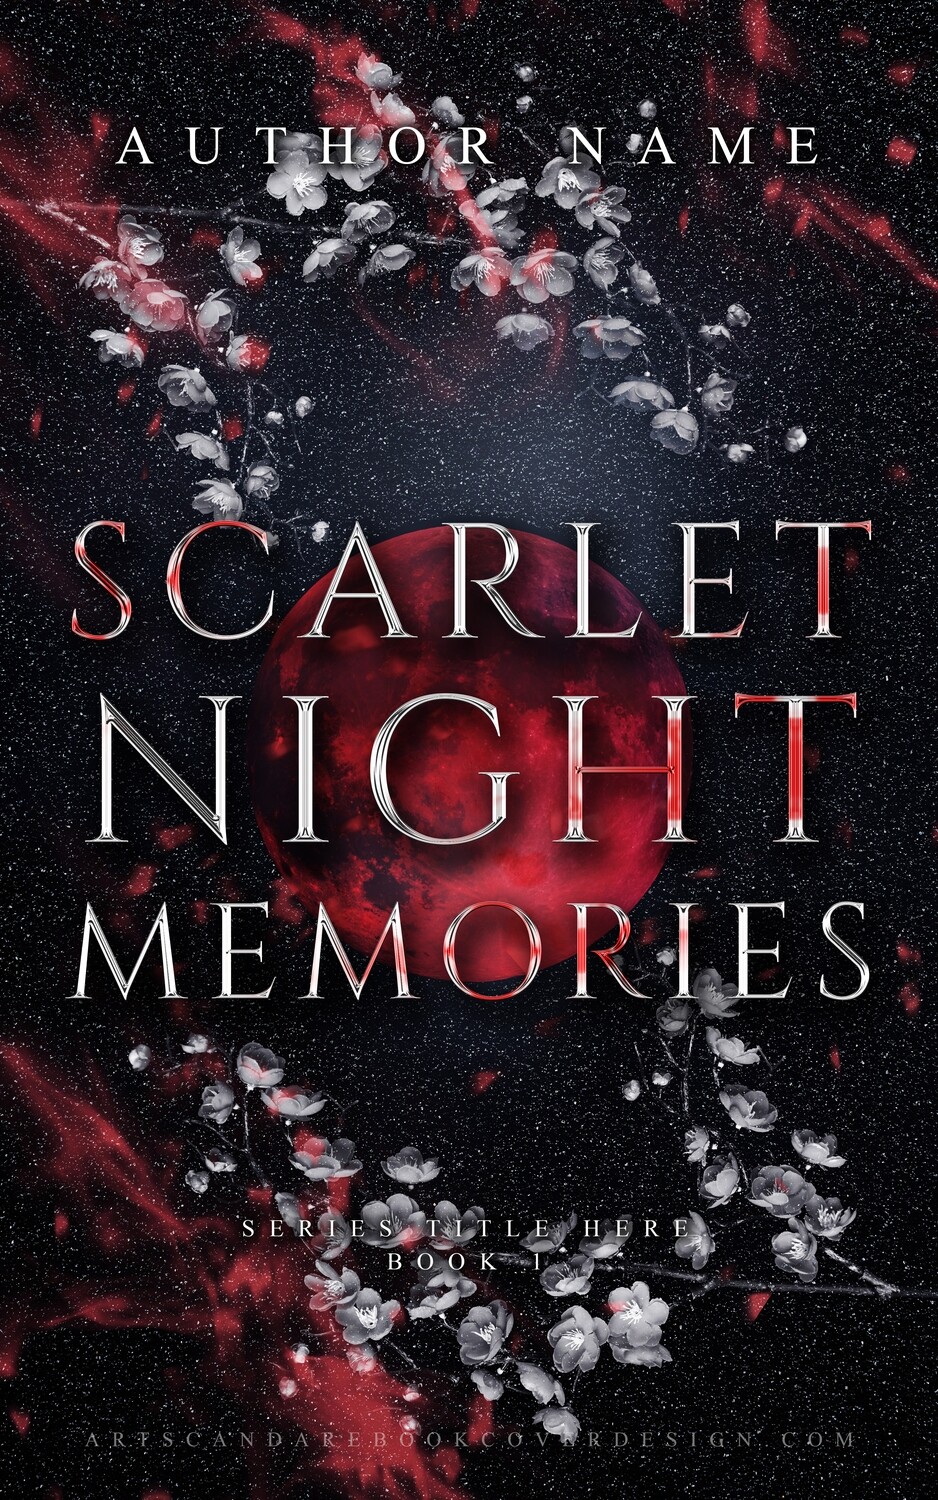 SCARLET NIGHT MEMORIES